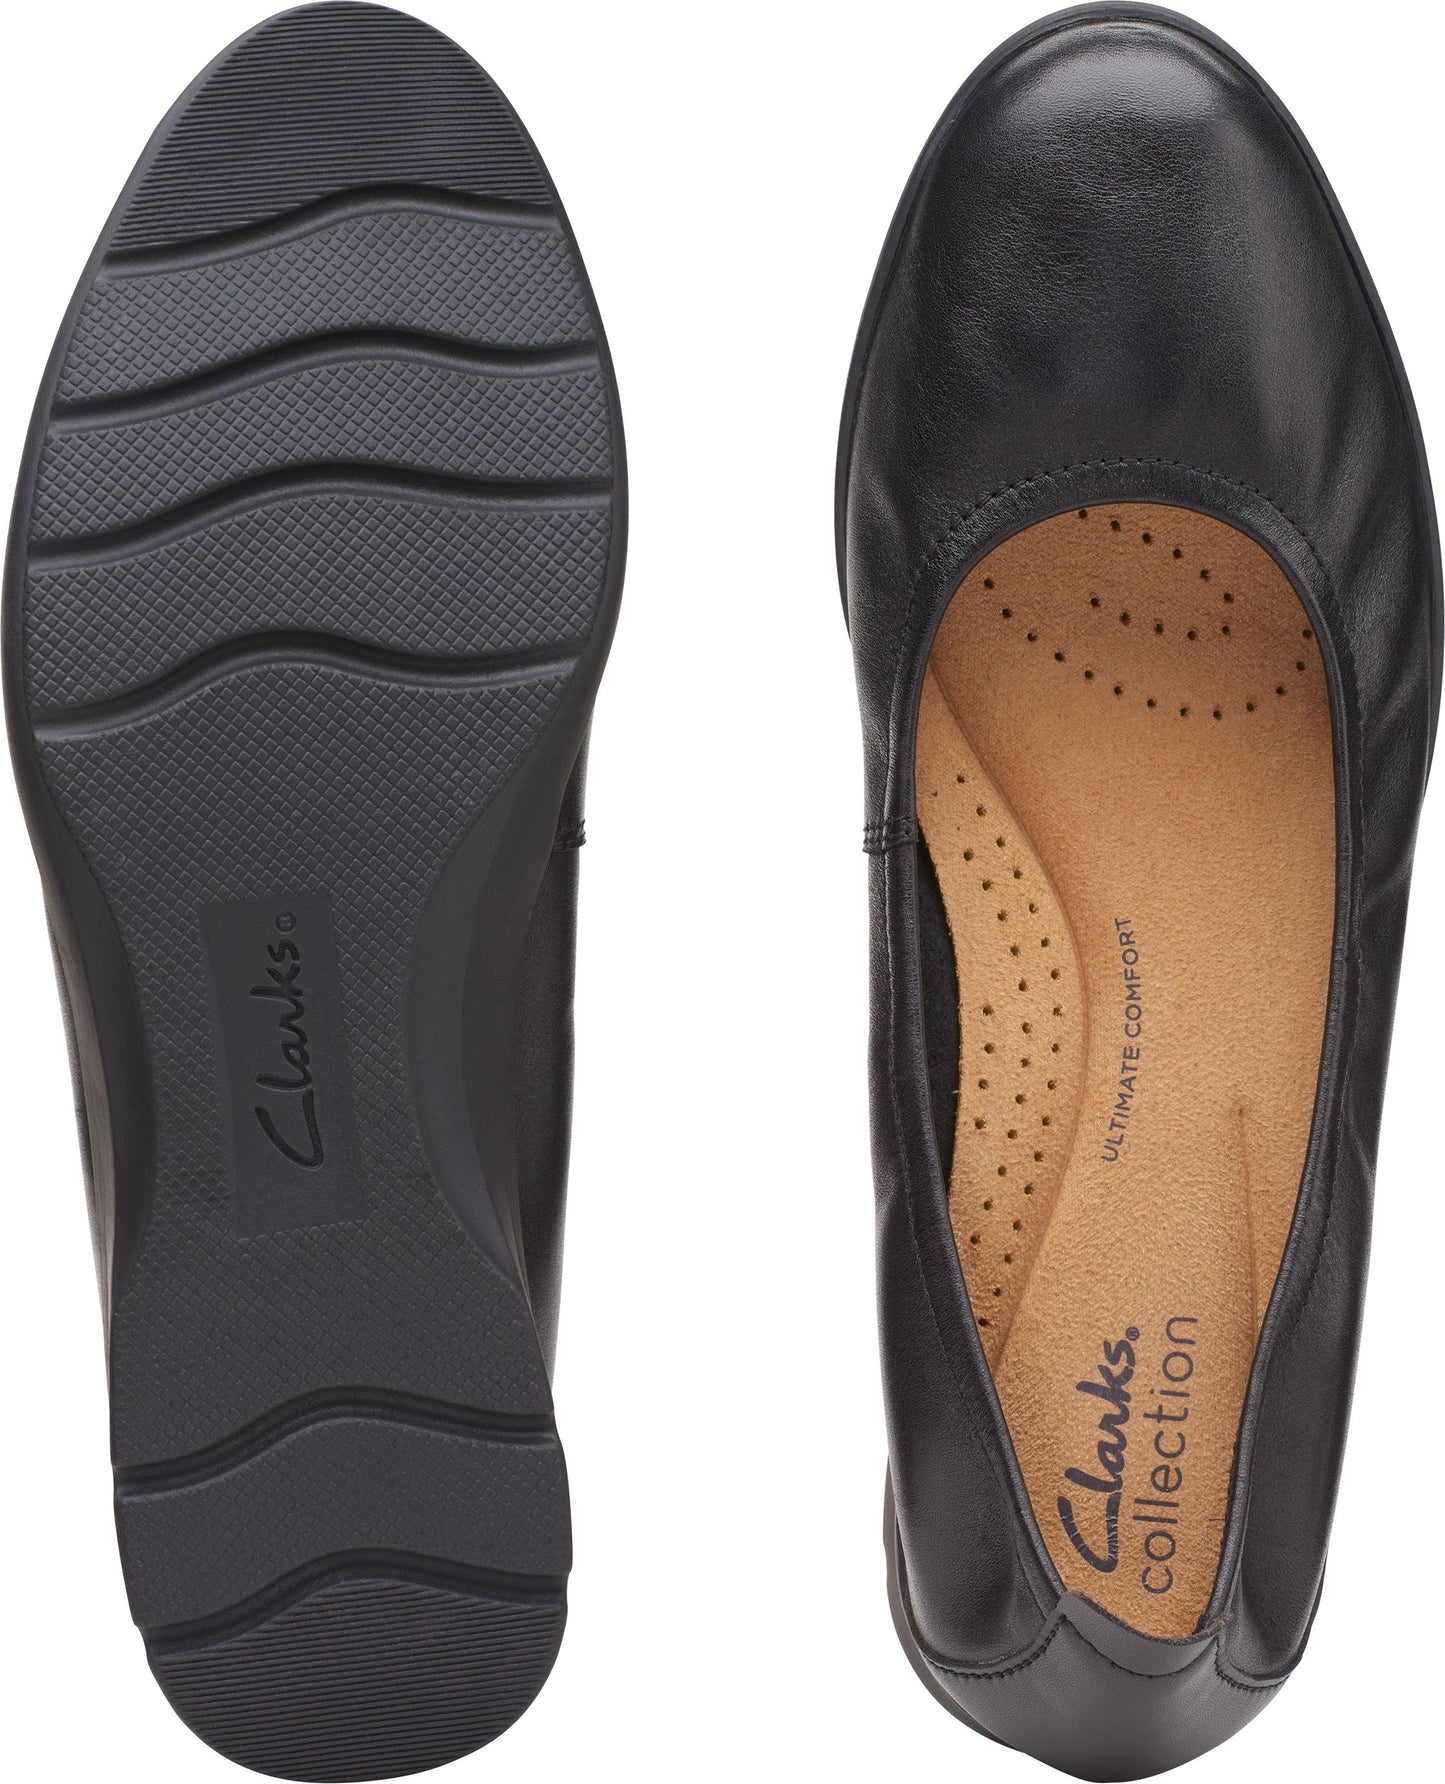 Clarks Shoes Jenette Ease Black